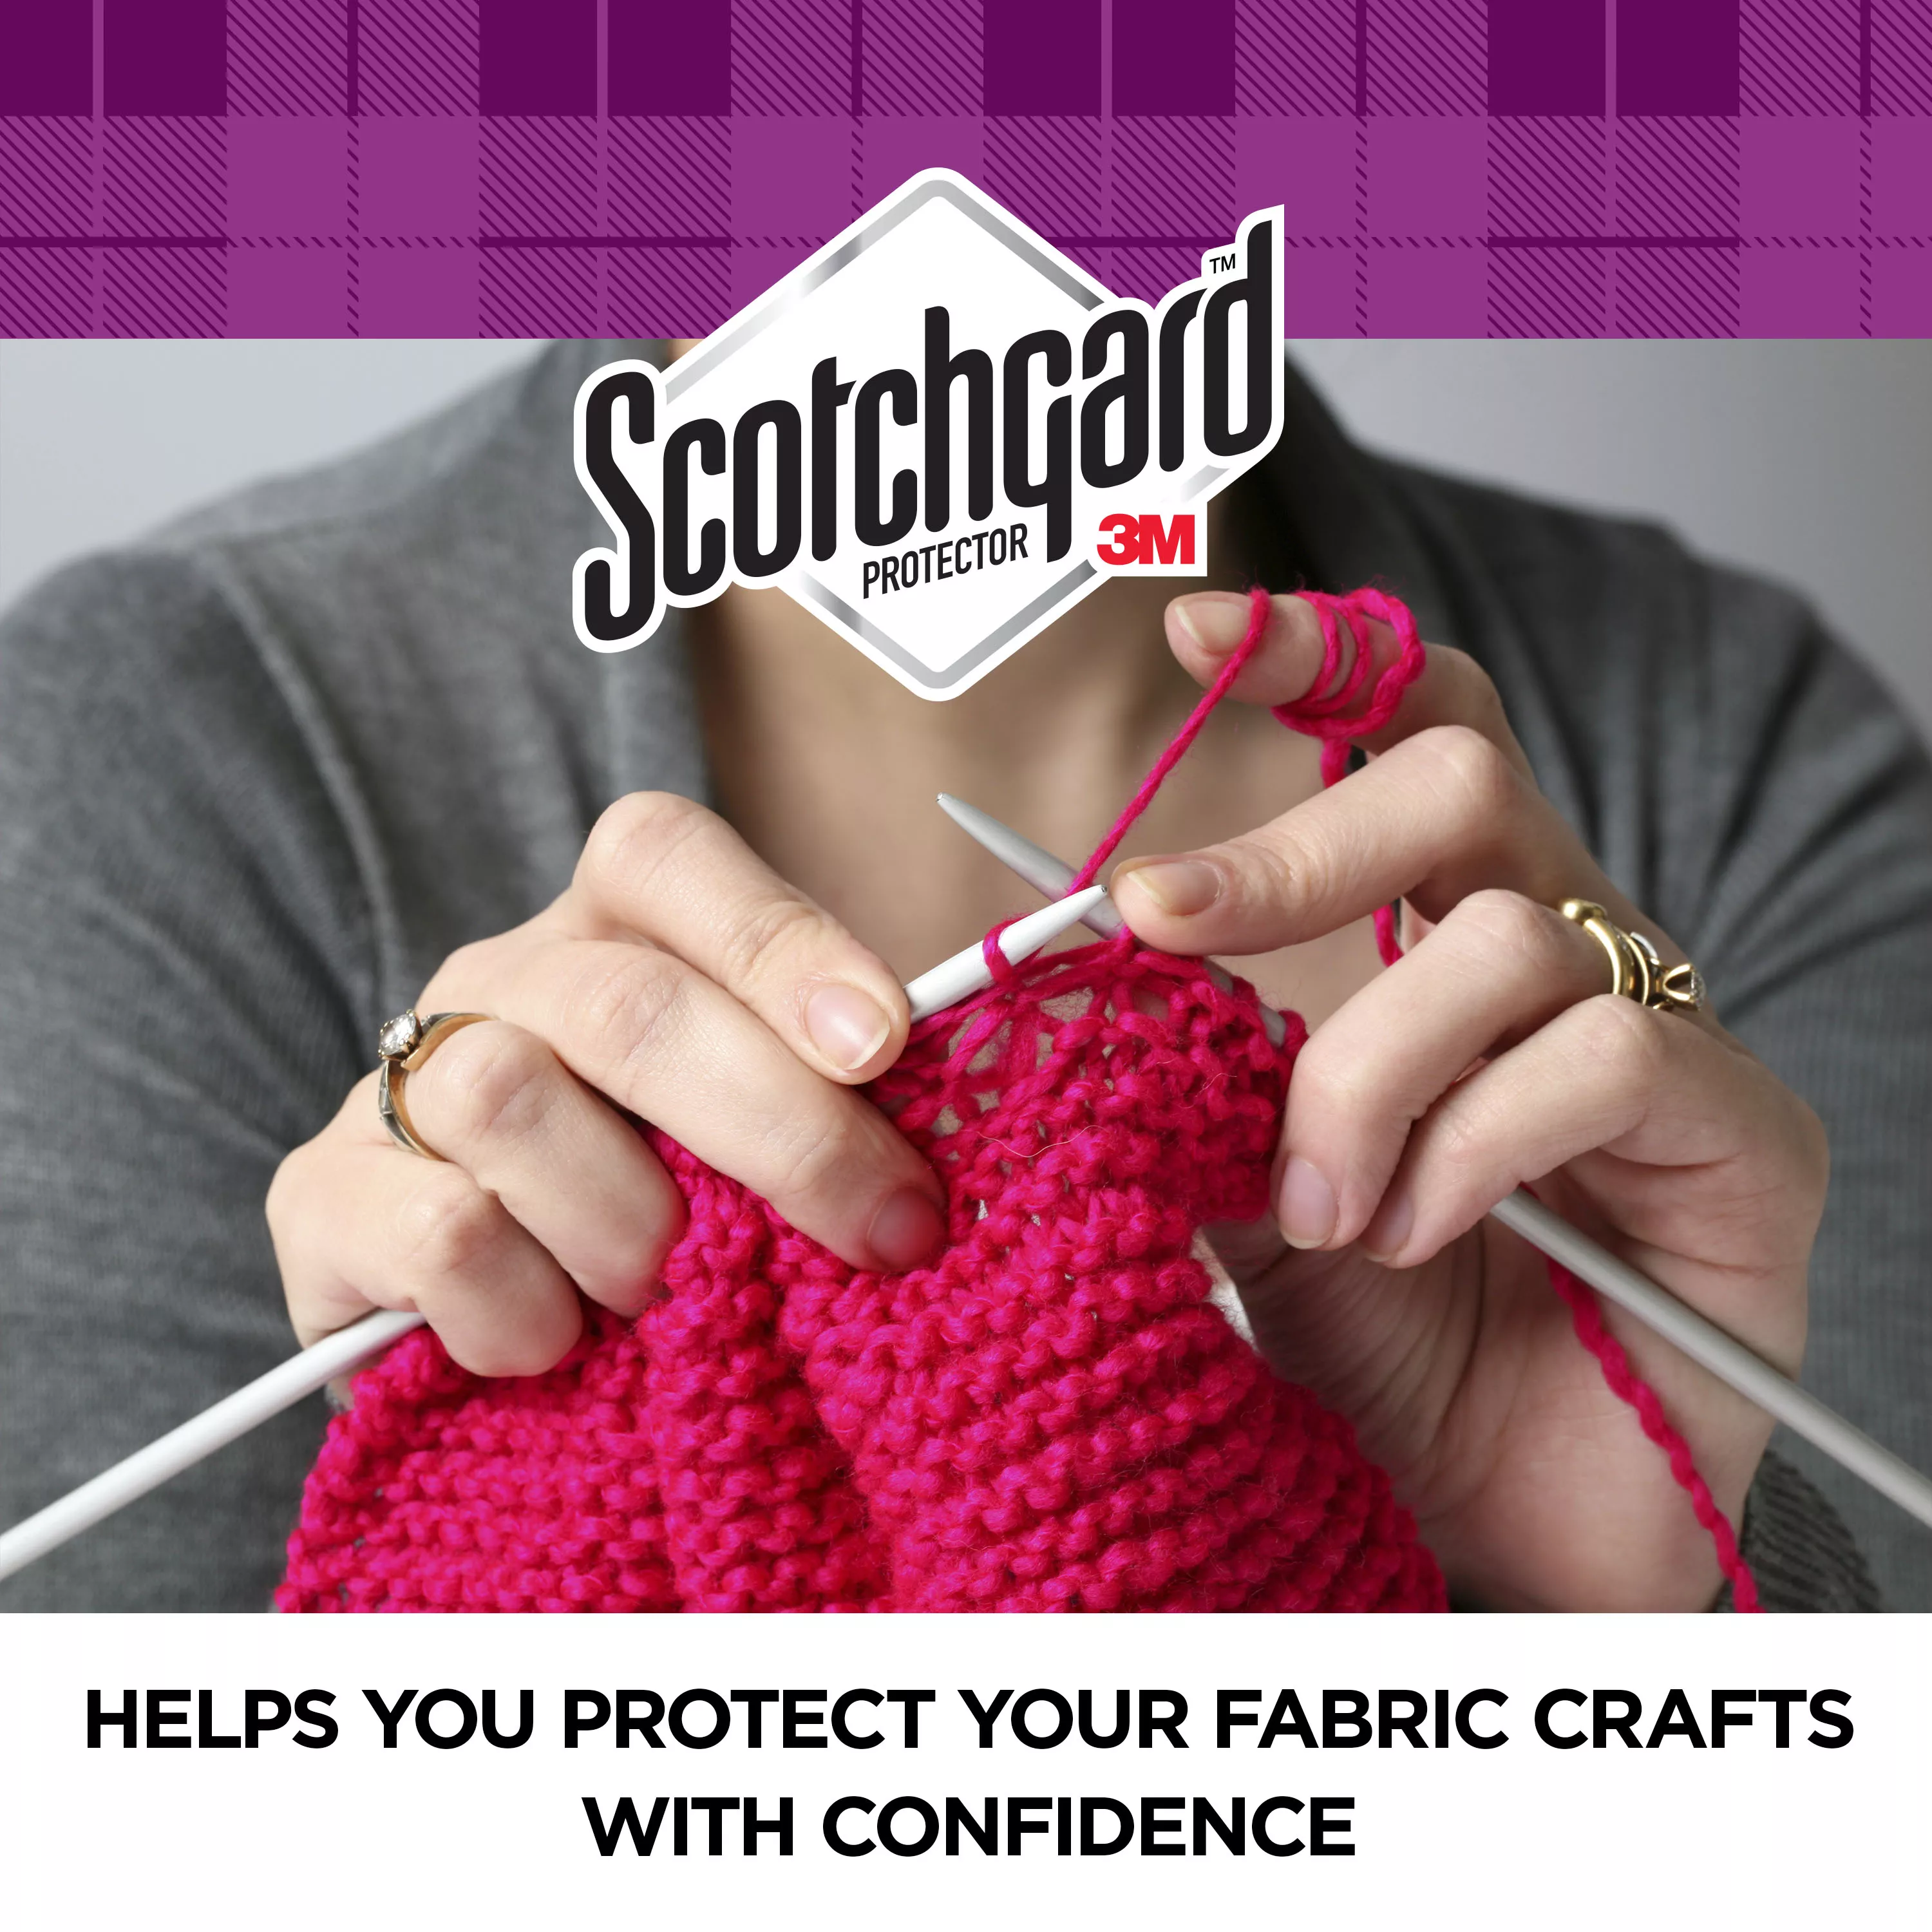 SKU 7100246744 | Scotchgard™ Fabric Crafts Water Shield 4206-10-4 PF